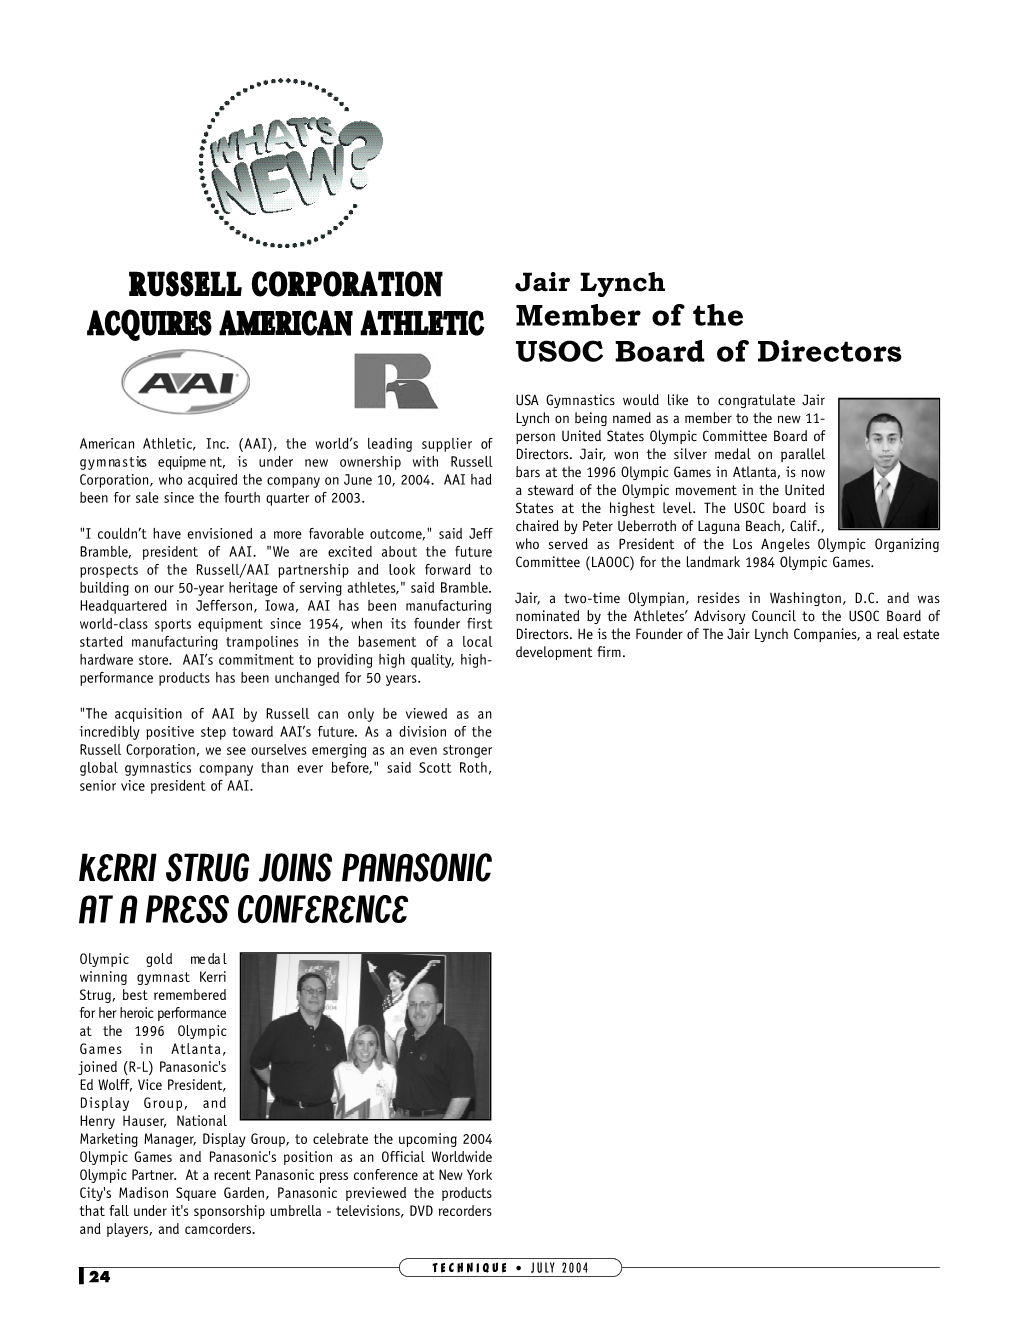 Jair Lynch Acquires AMERICAN ATHLETIC Member of the USOC Board of Directors